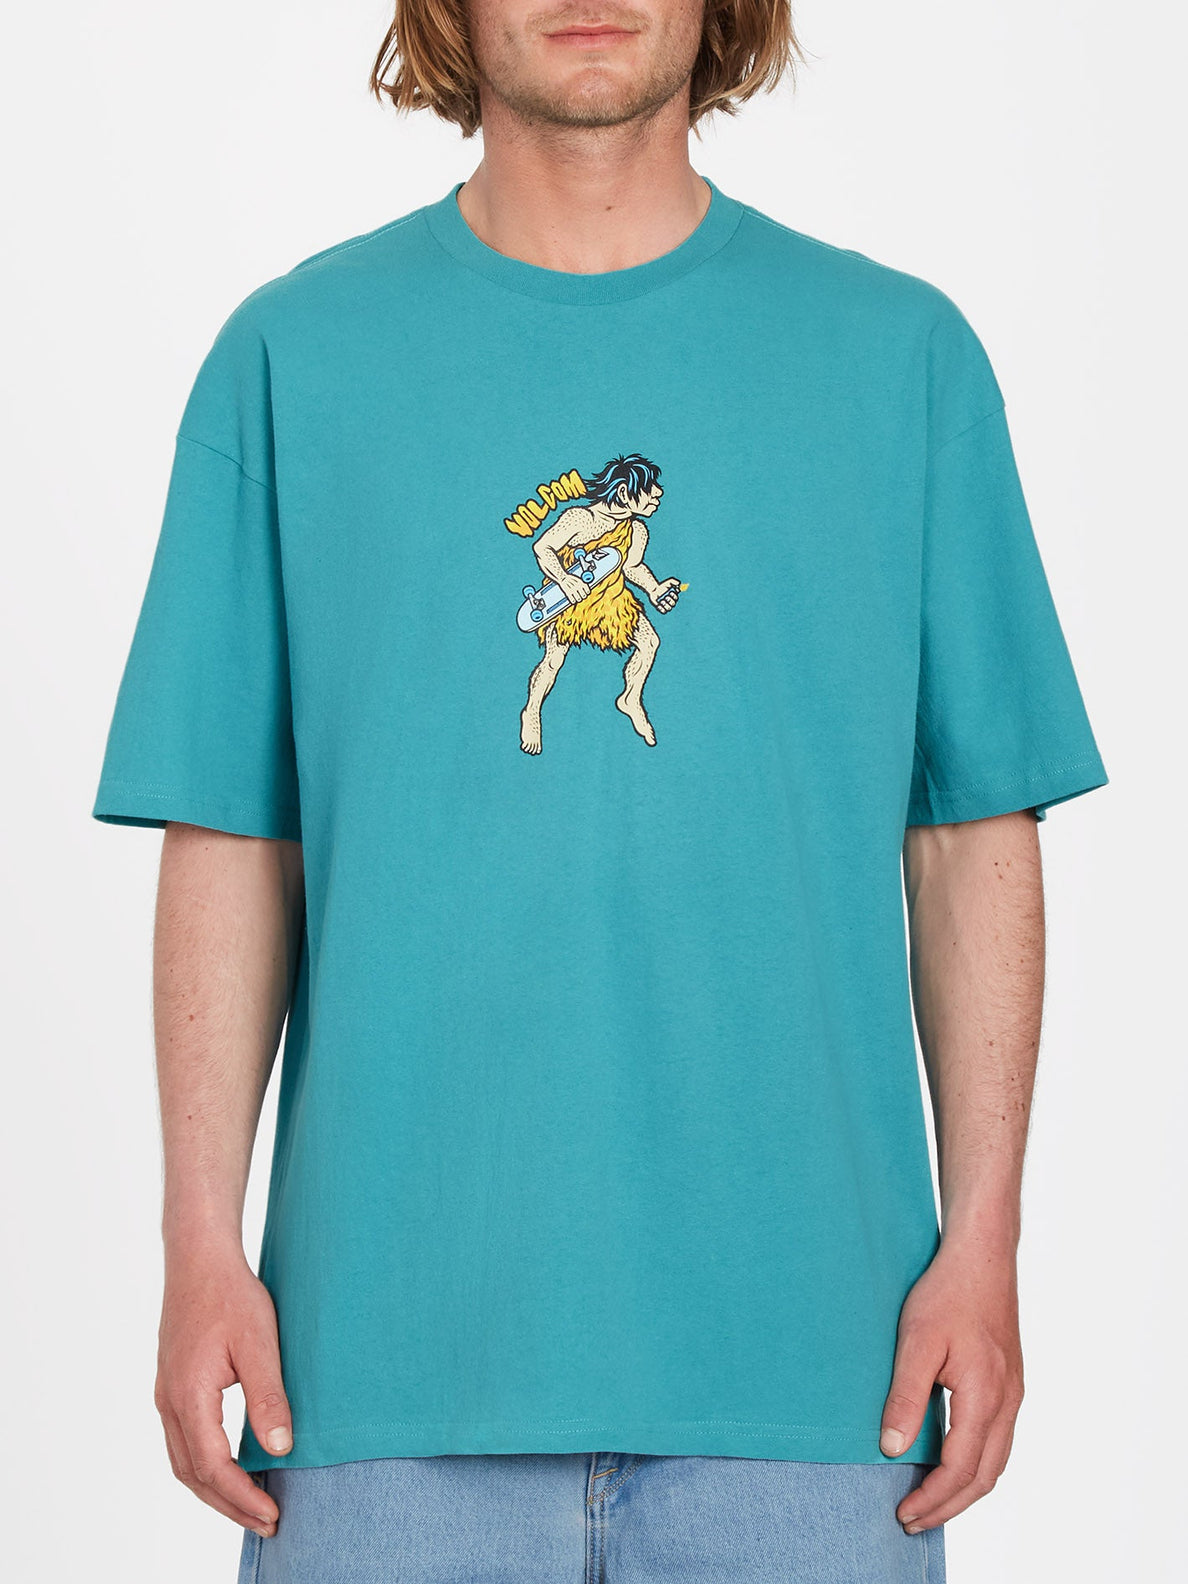 Camiseta Volcom Todd Bratrud 2 SS Temple Teal | Camisetas de hombre | Camisetas manga corta de hombre | Volcom Shop | surfdevils.com